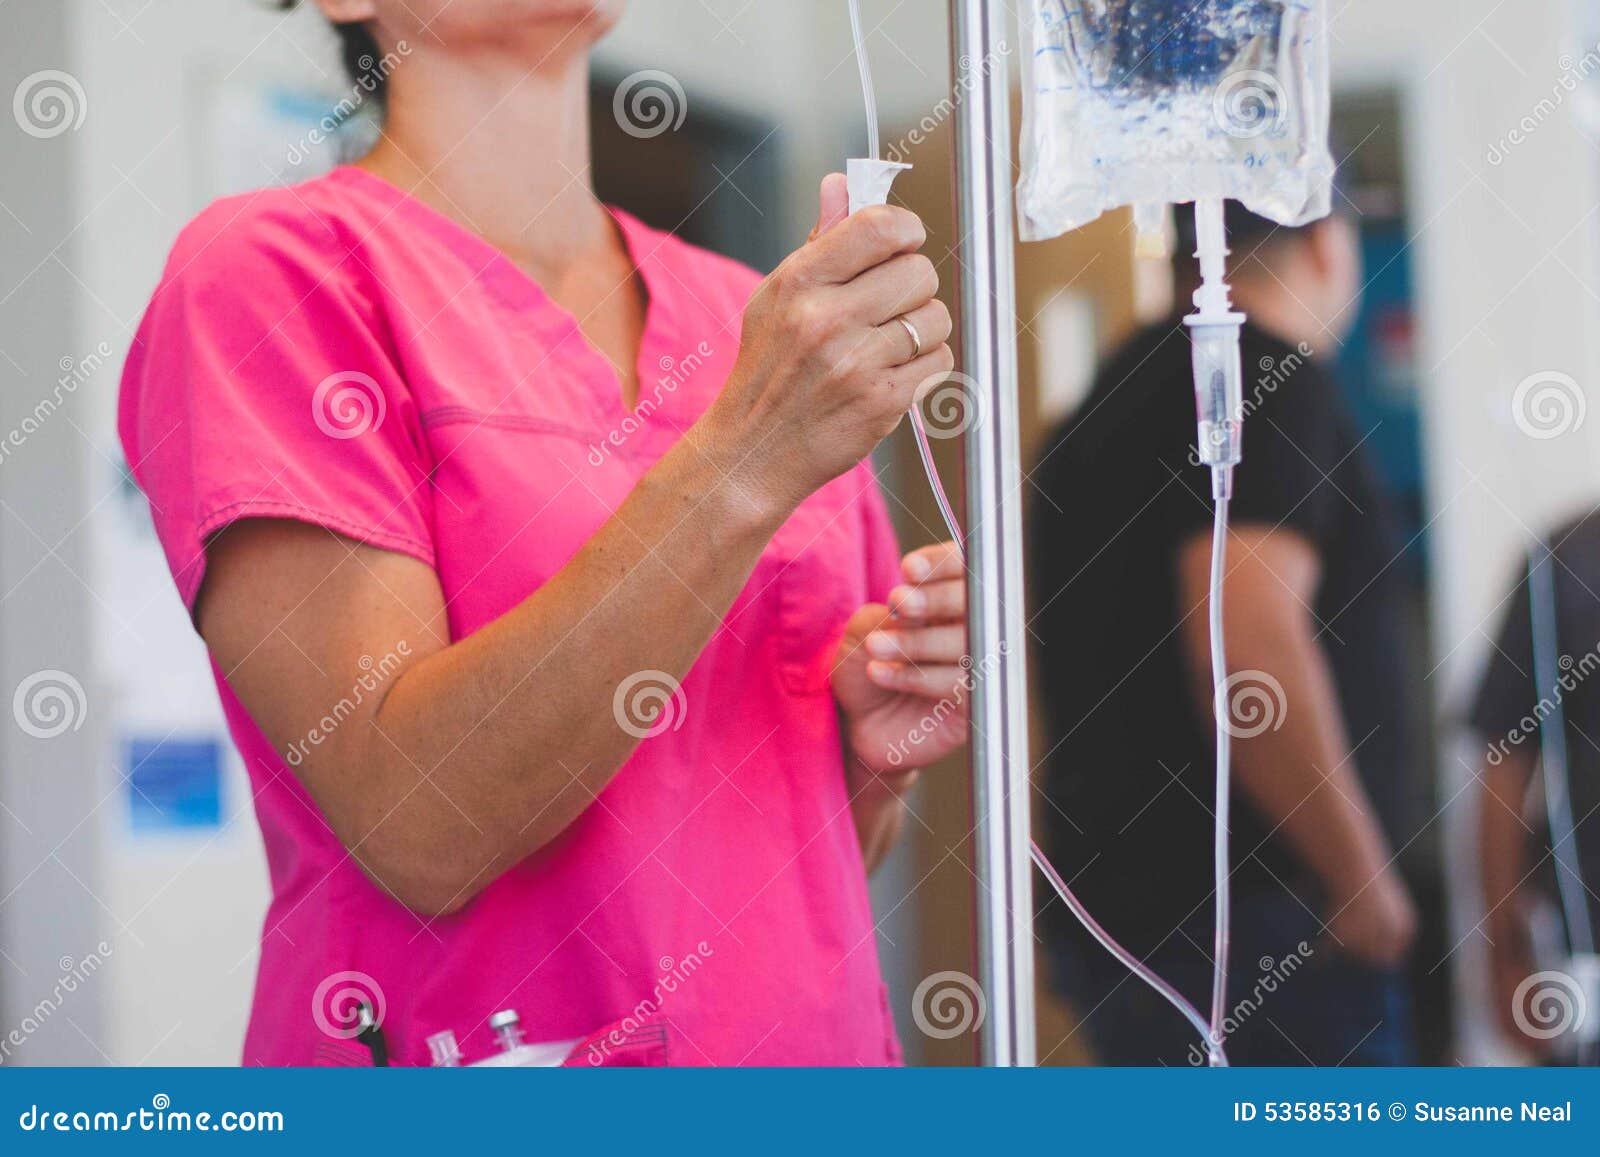 registered nurse wearing hot pink scrubs hangs iv